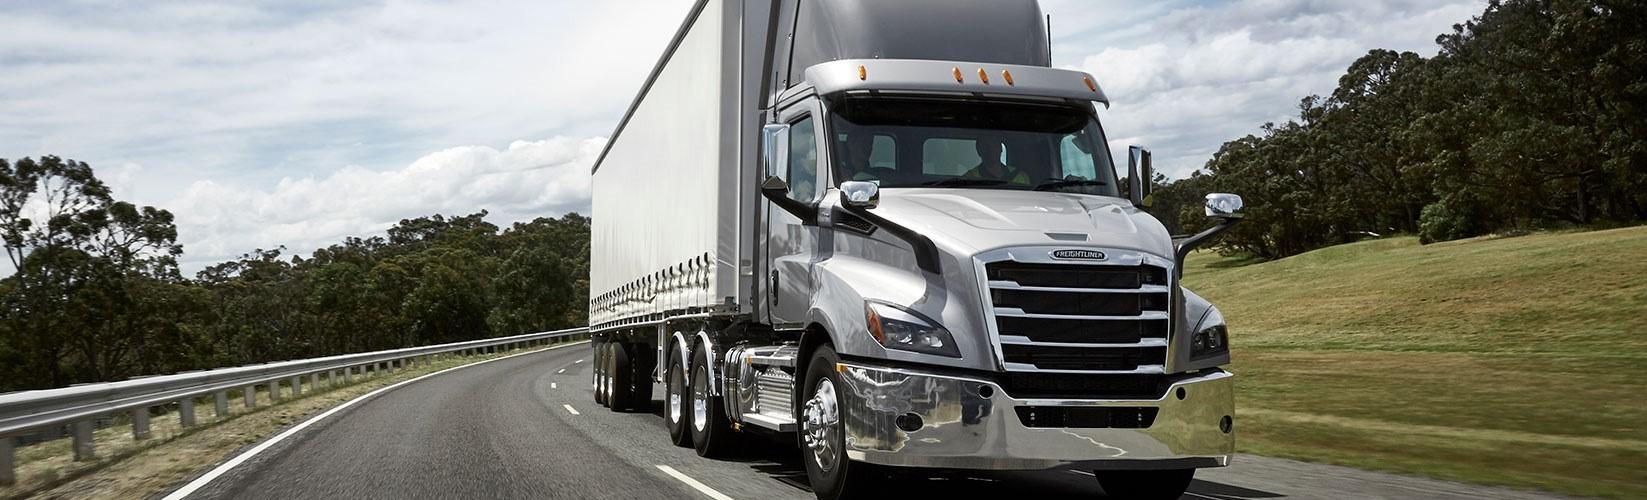 FREIGHTLINER Trucks US North America FACTORY